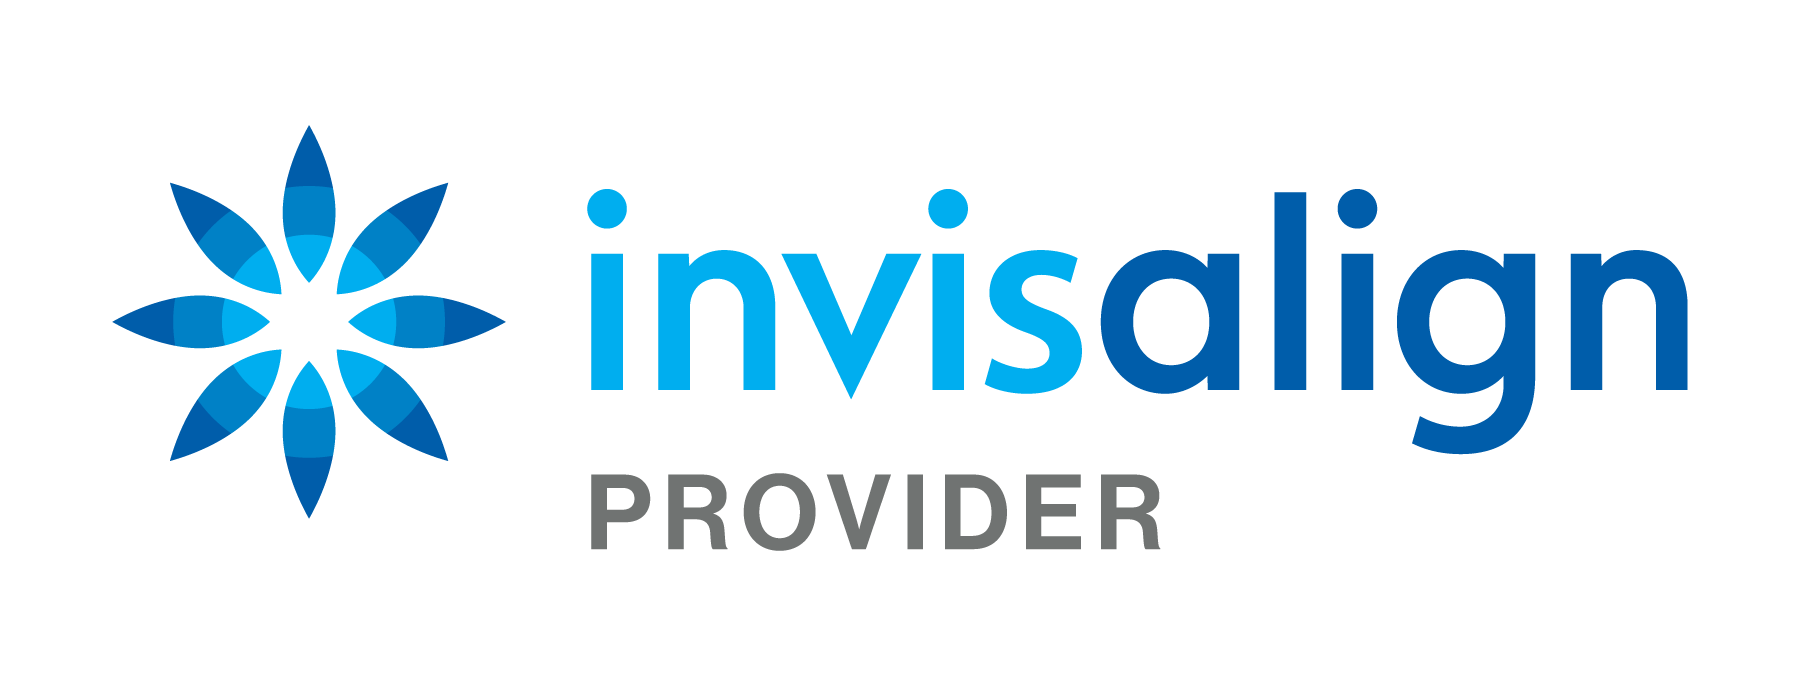 Invisalign provider logo